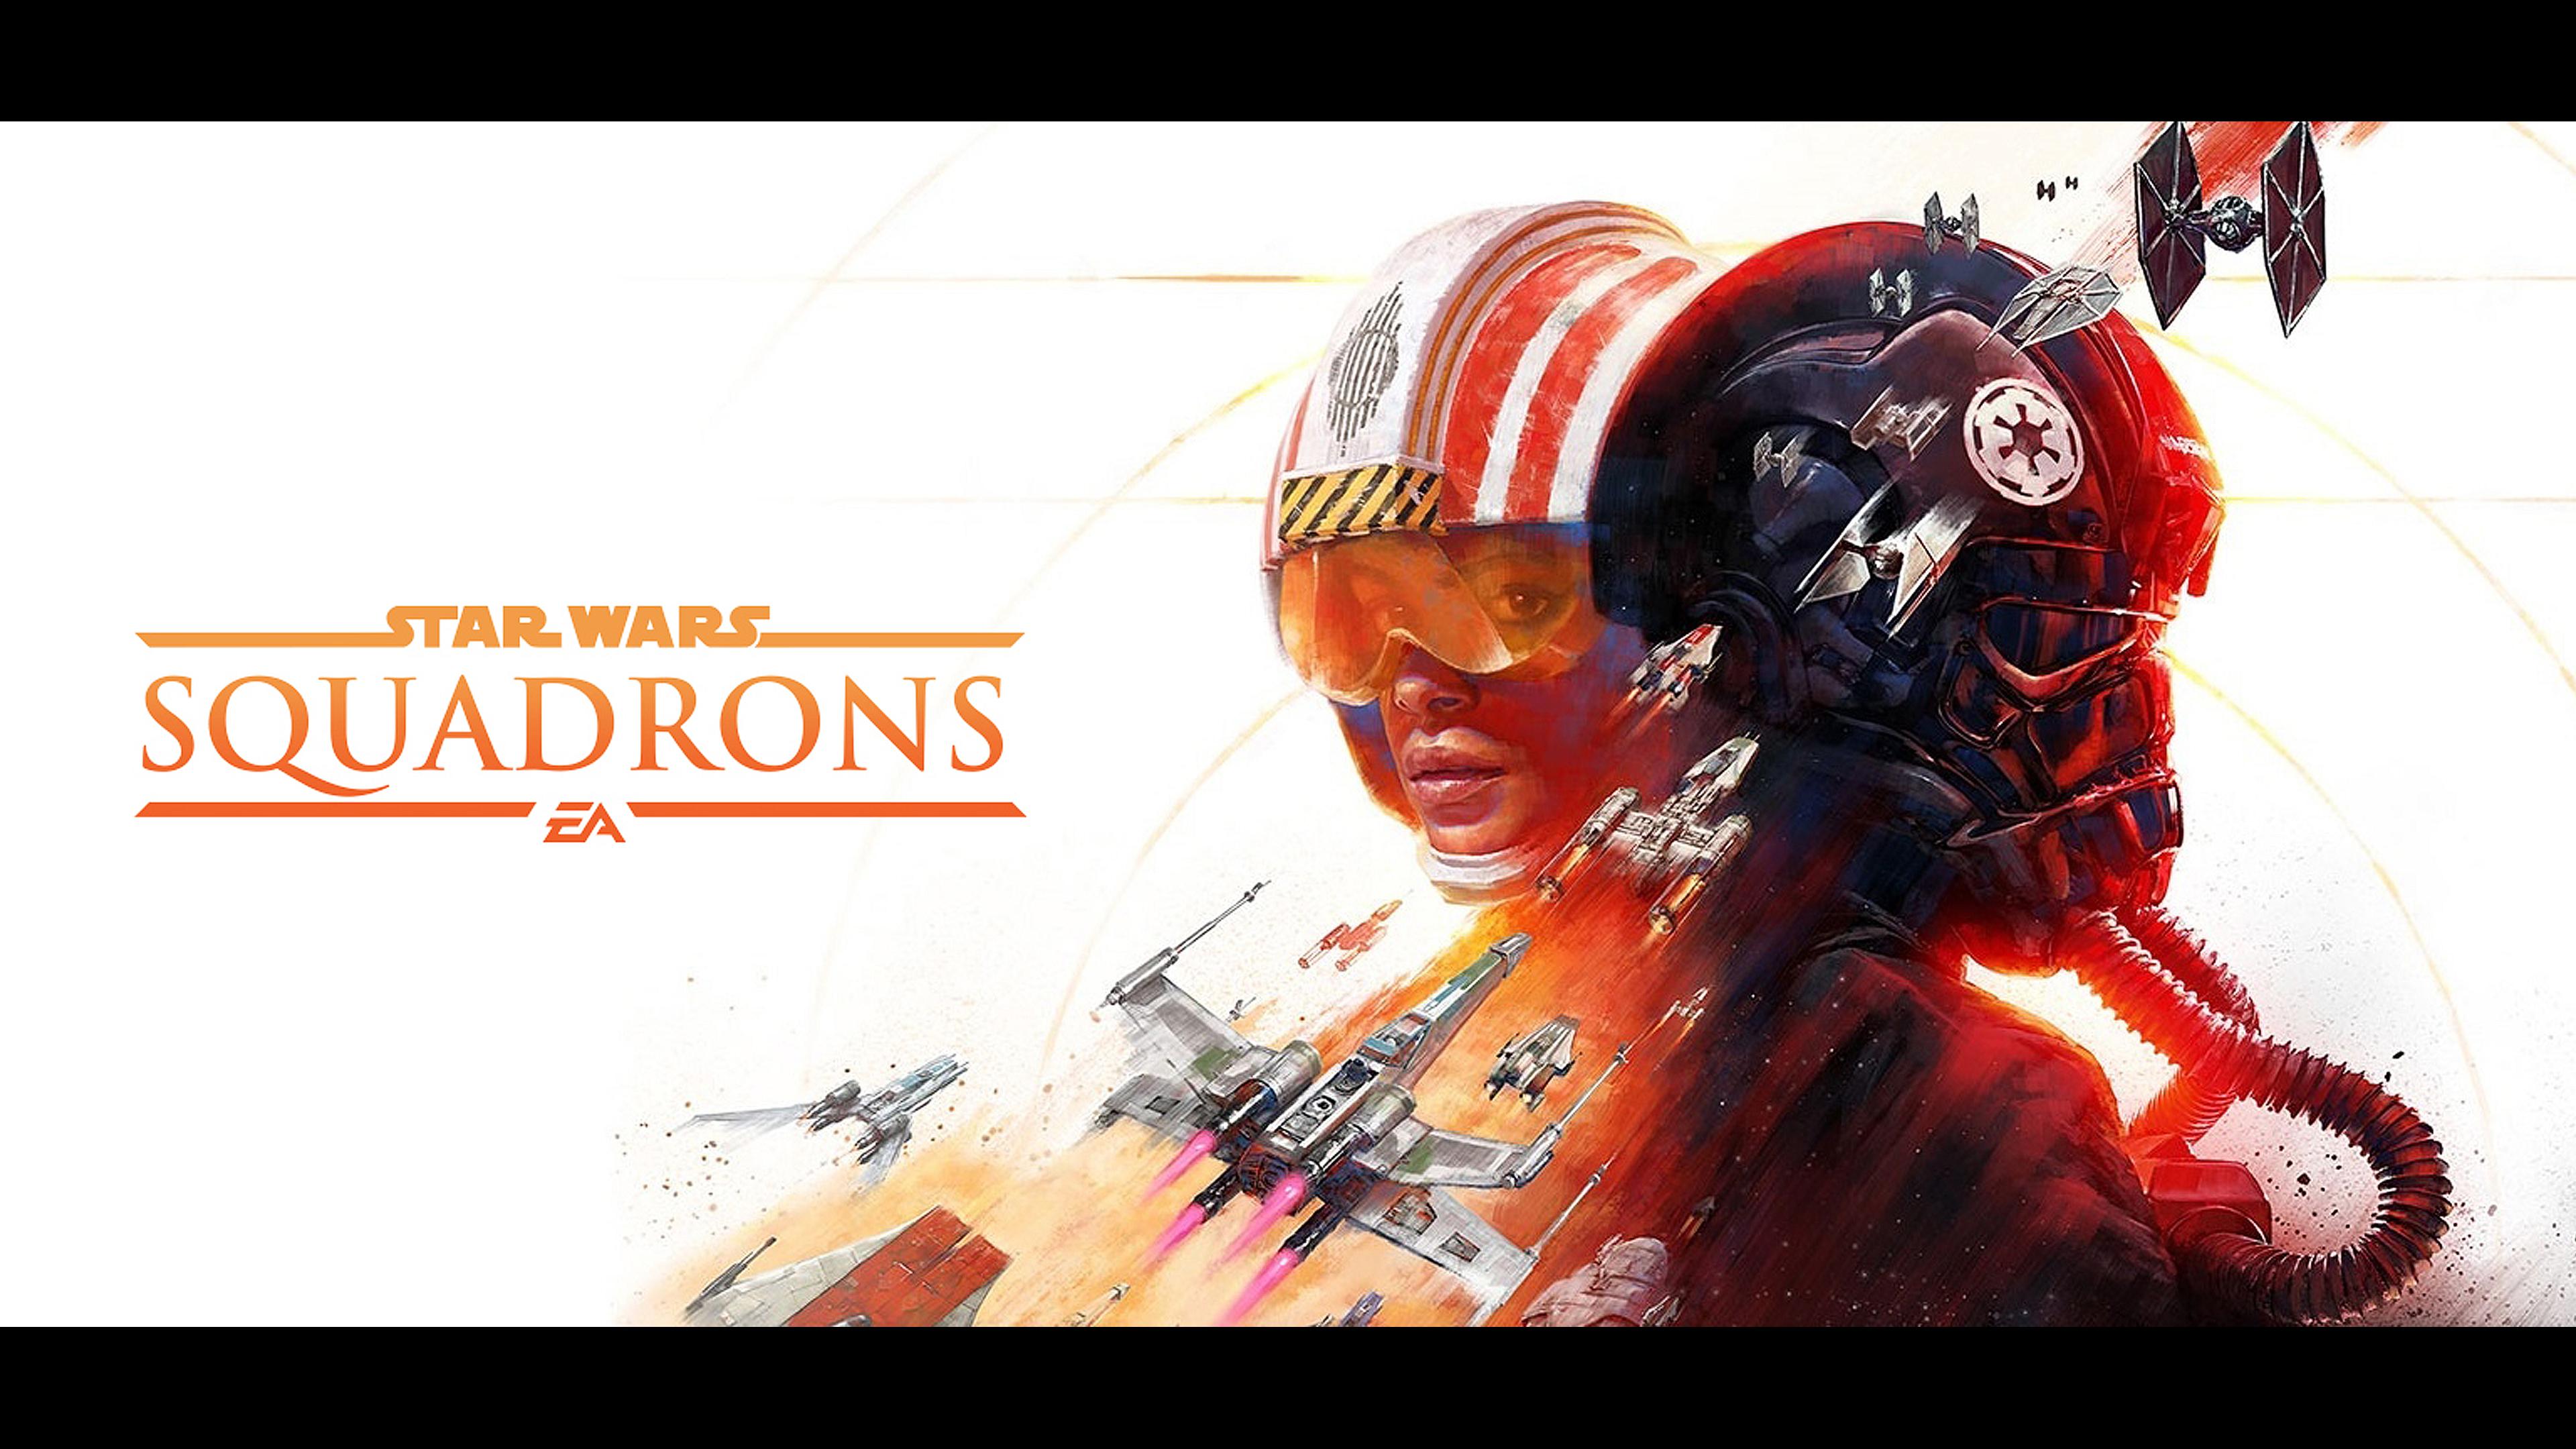 STAR WARS SQUADRONS [EA]. Ultra 4K Wallpaper. Enjoy & May